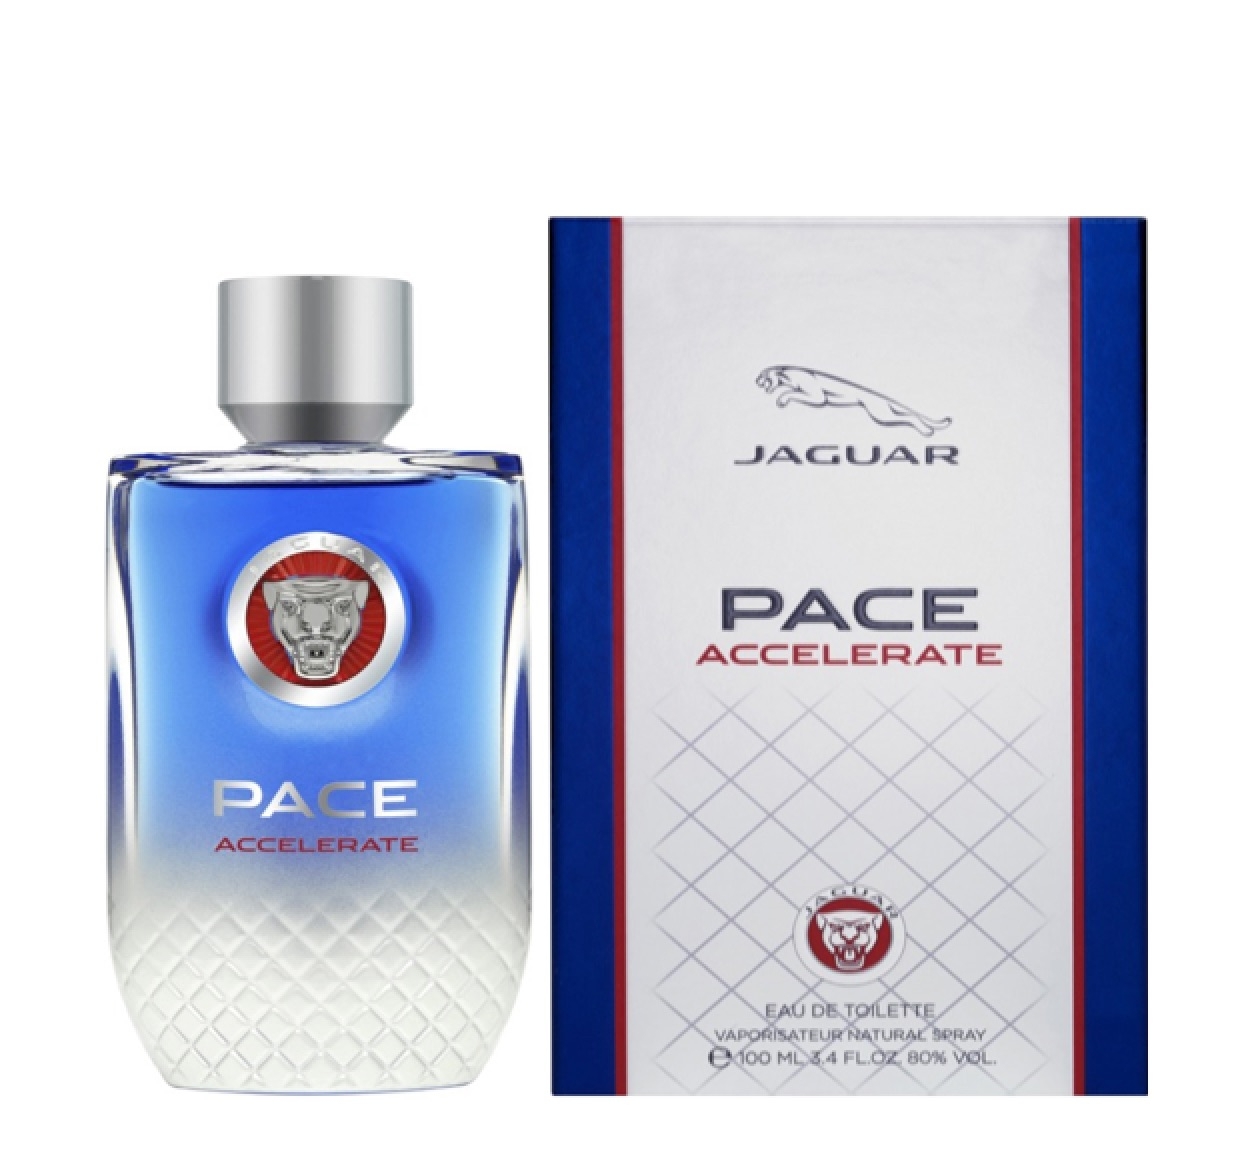 Jaguar Pace Accelerate Eau de Toilette 100ml – Perfume Essence